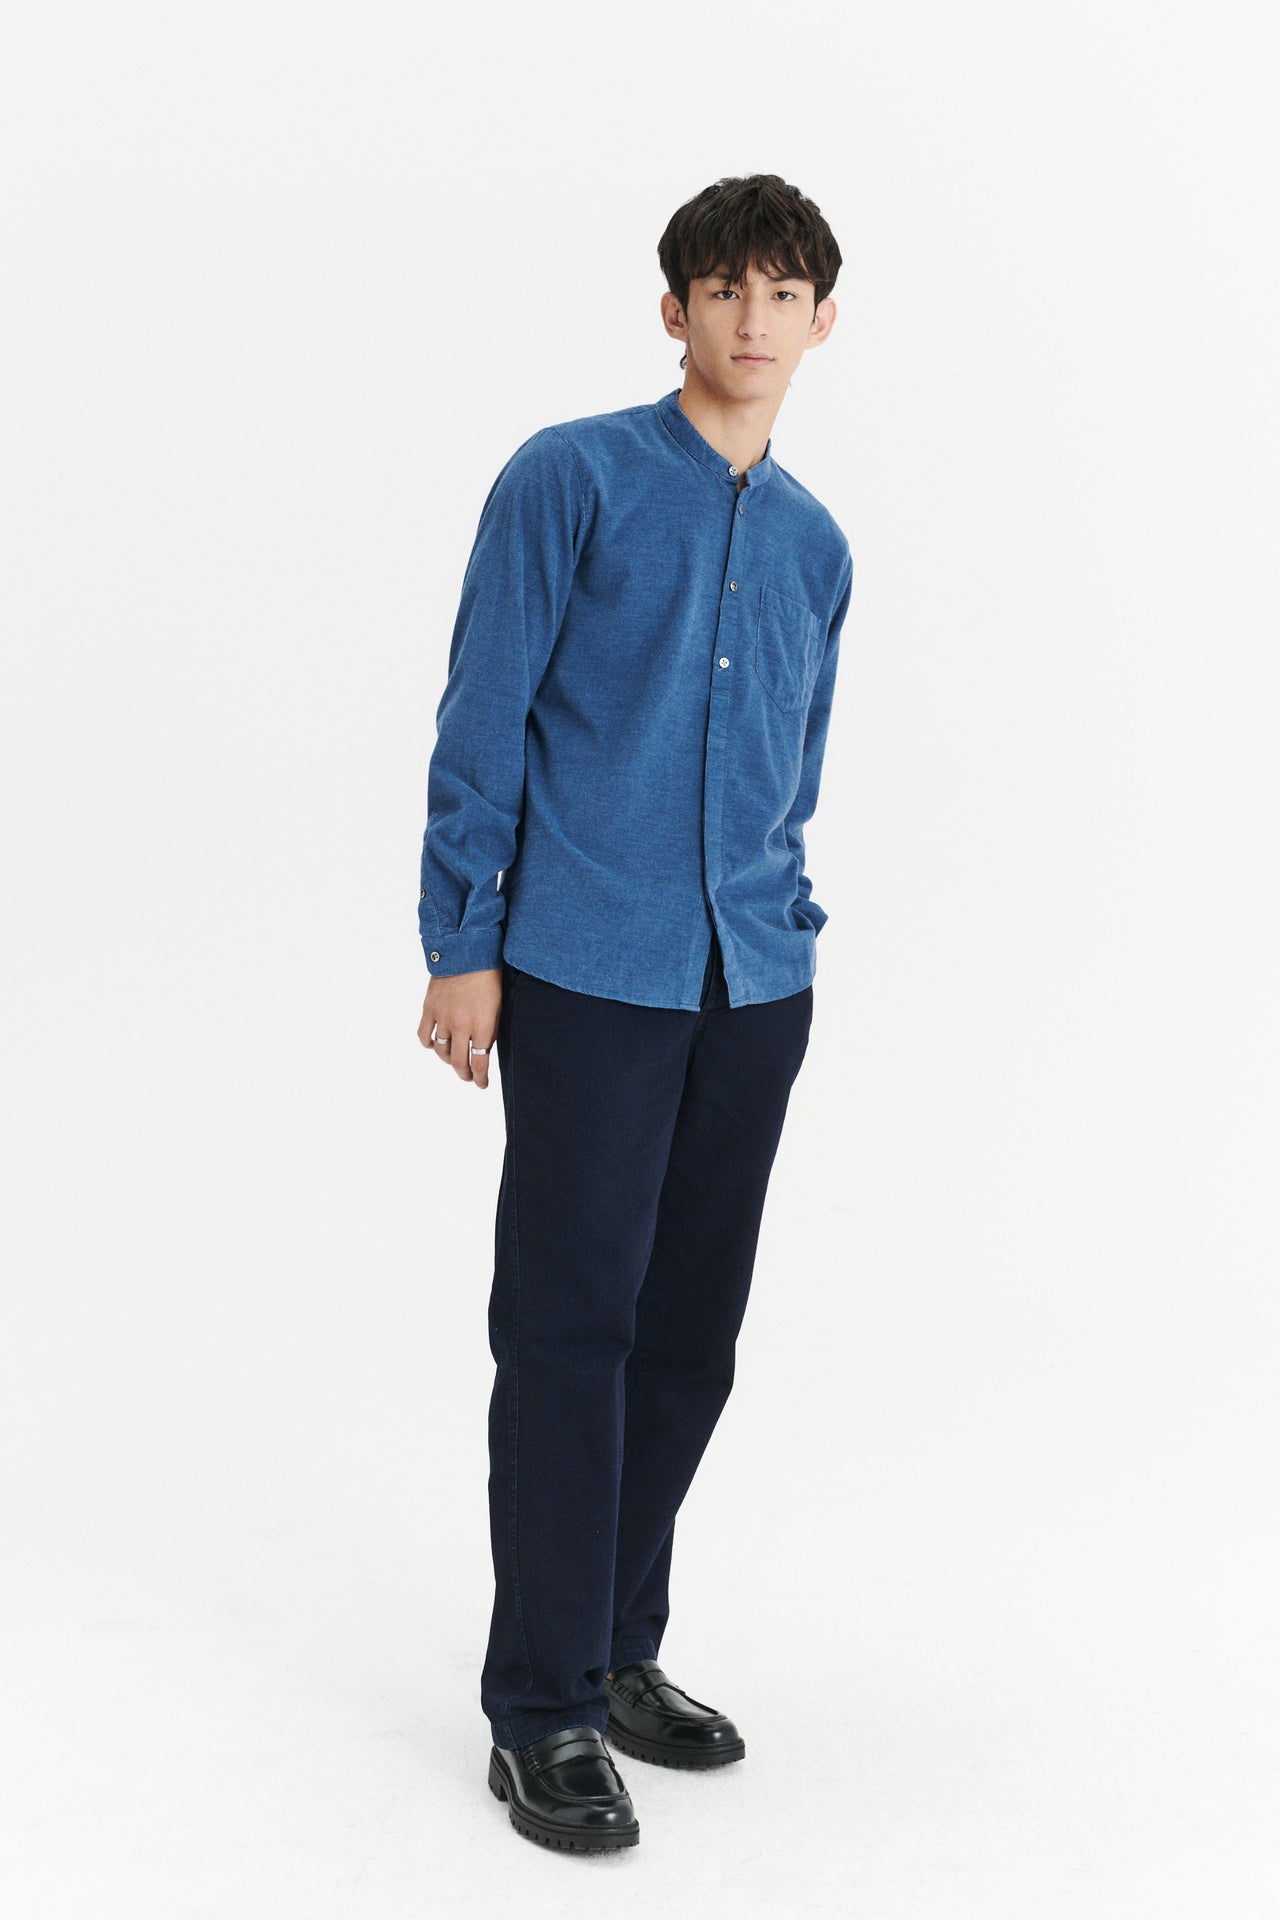 Zen Shirt in Indigo Blue Japanese Baby Corduroy Cotton